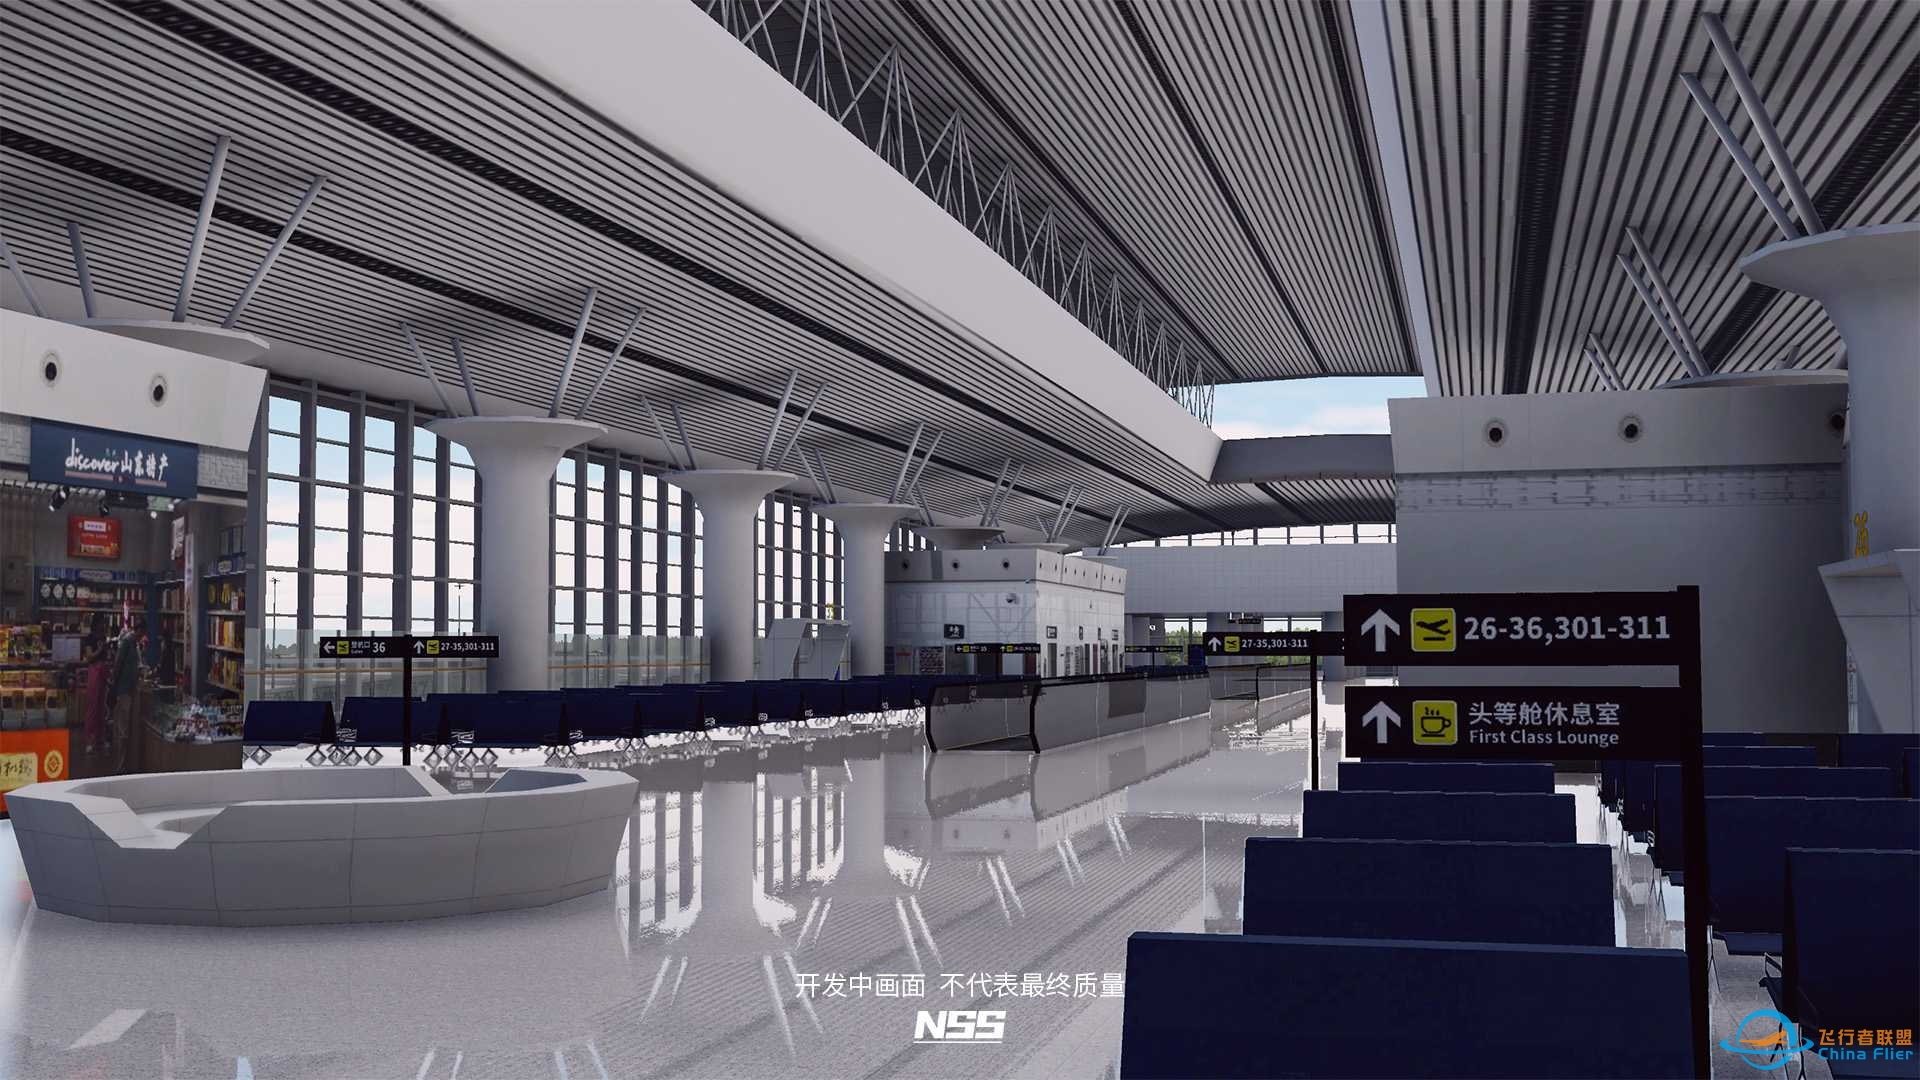 NSS地景开发组 | ZSJN | 济南遥墙国际机场项目最新进展-6166 